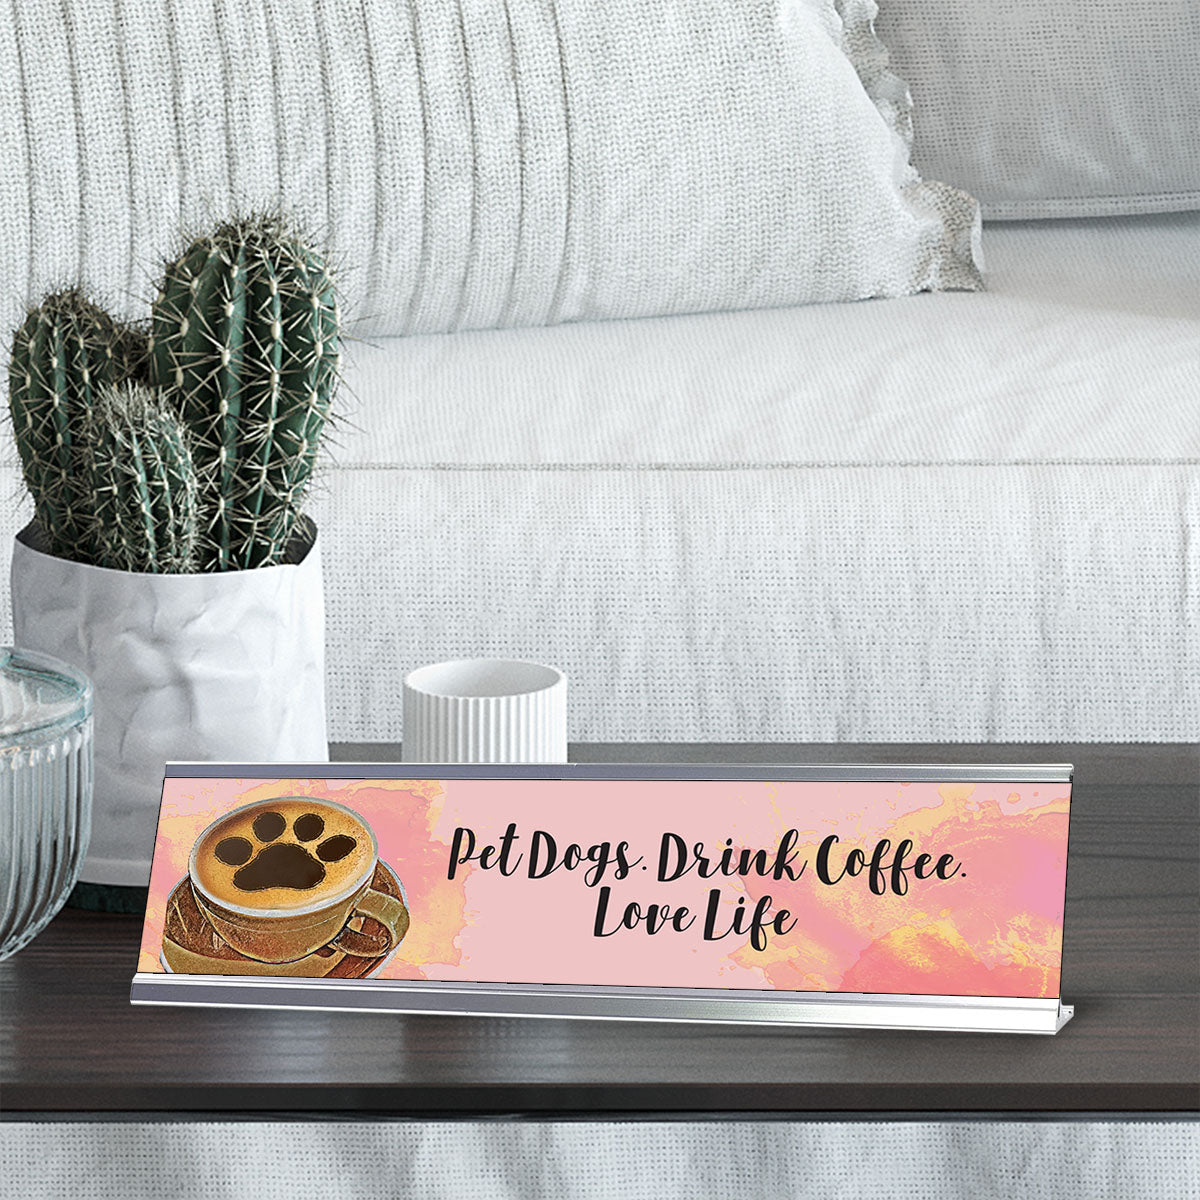 Pet Dogs. Drink Coffee. Love Life, Designer Nameplate Desk Sign (2 x 8")